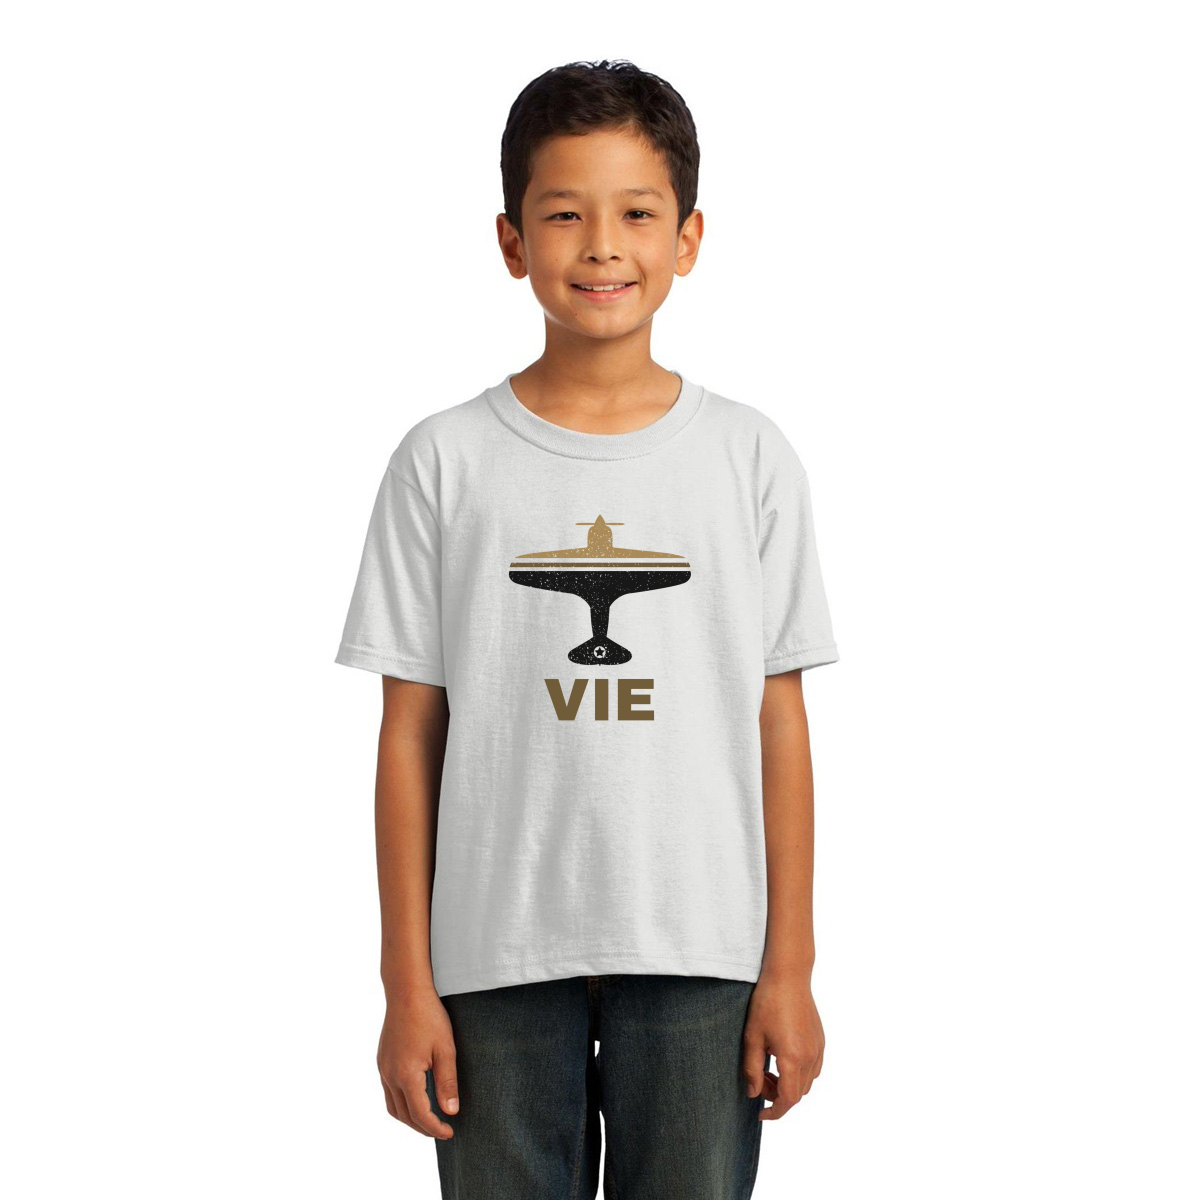 Fly Vienna VIE Airport Kids T-shirt | White